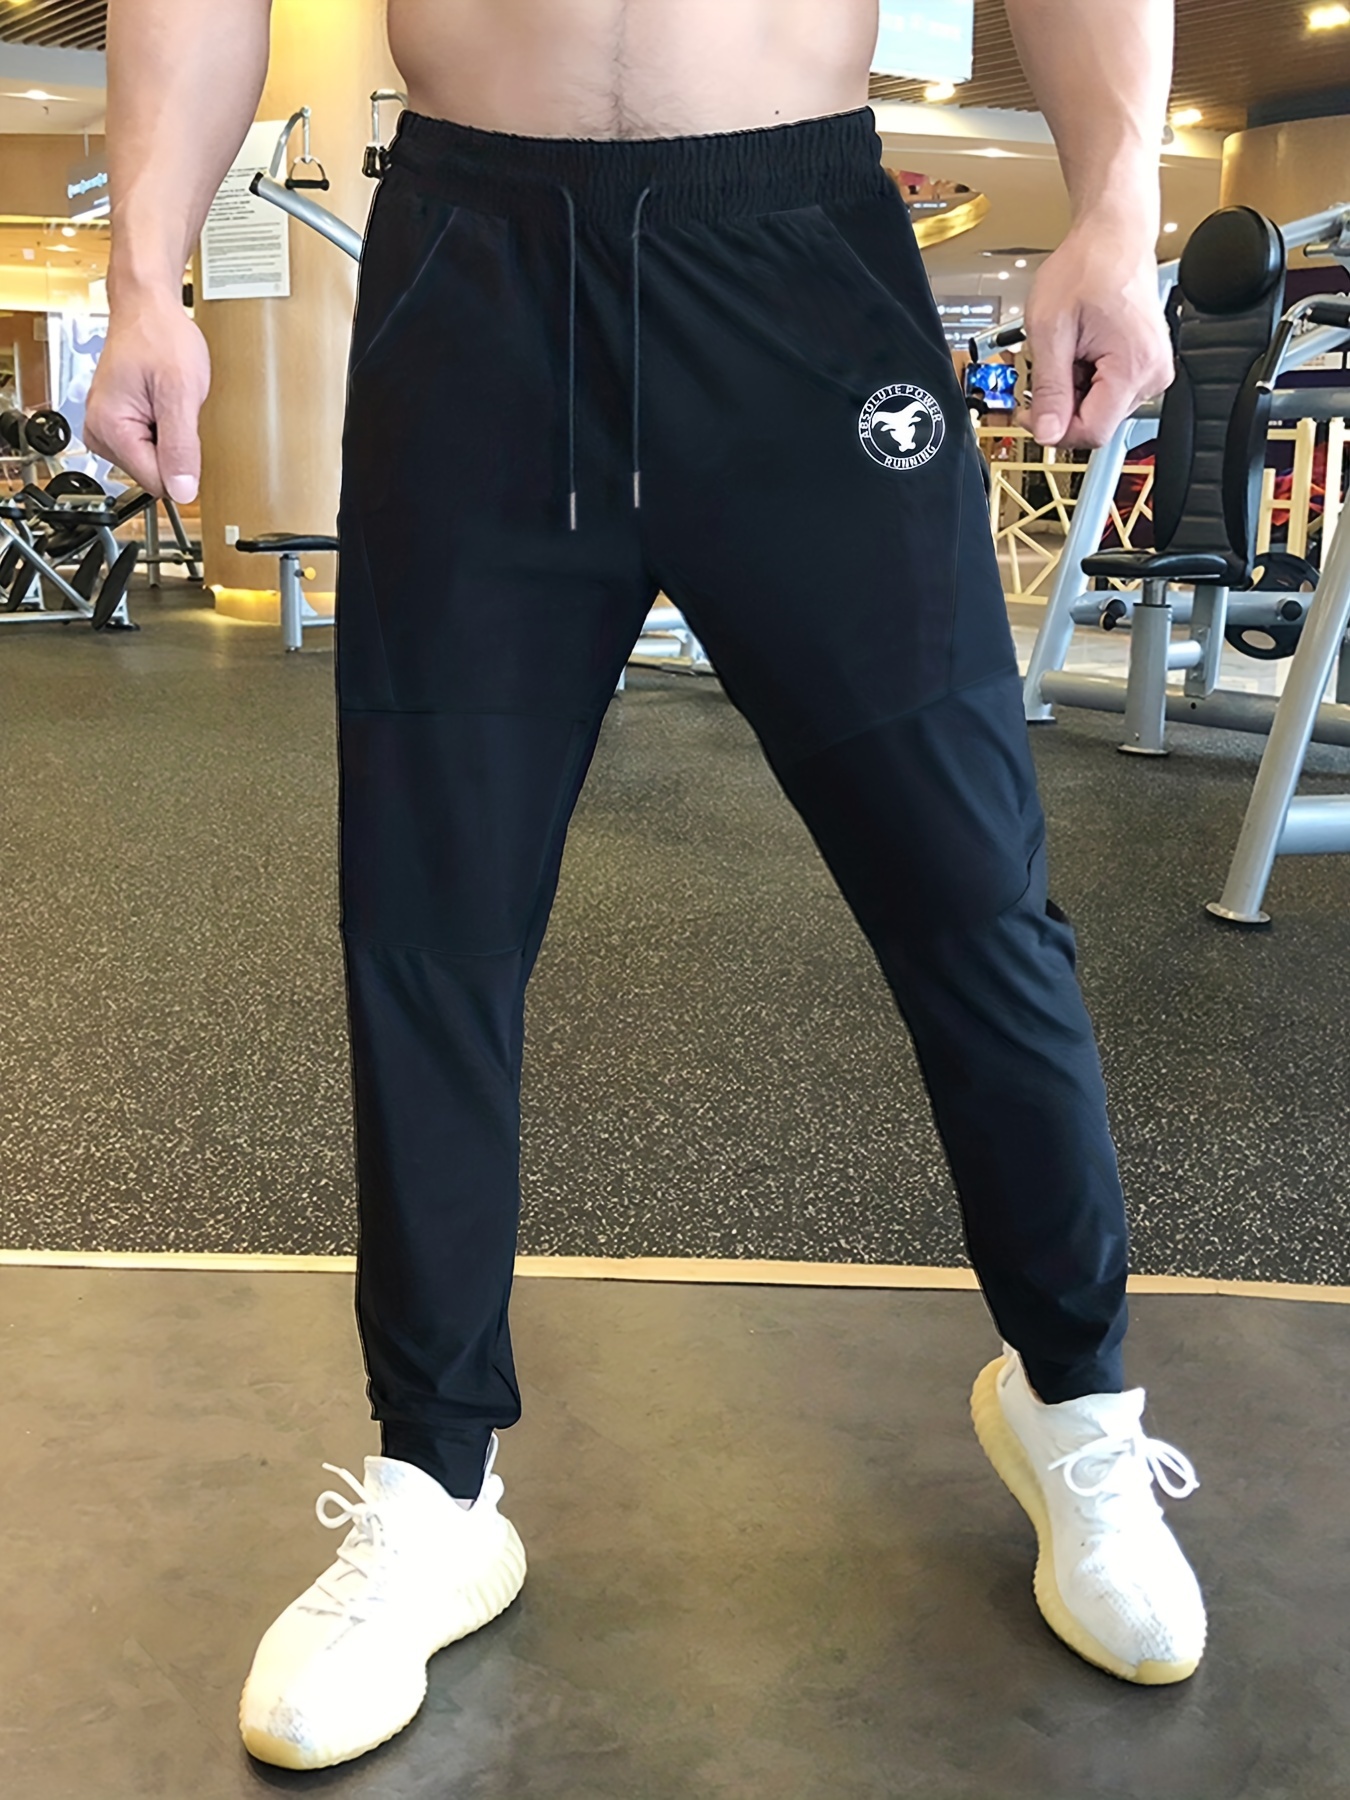 IROINNID Mens SweatPants Solid Color Tight Fitting Pockets Fitness Sport  Pants Elastic Waist Pants